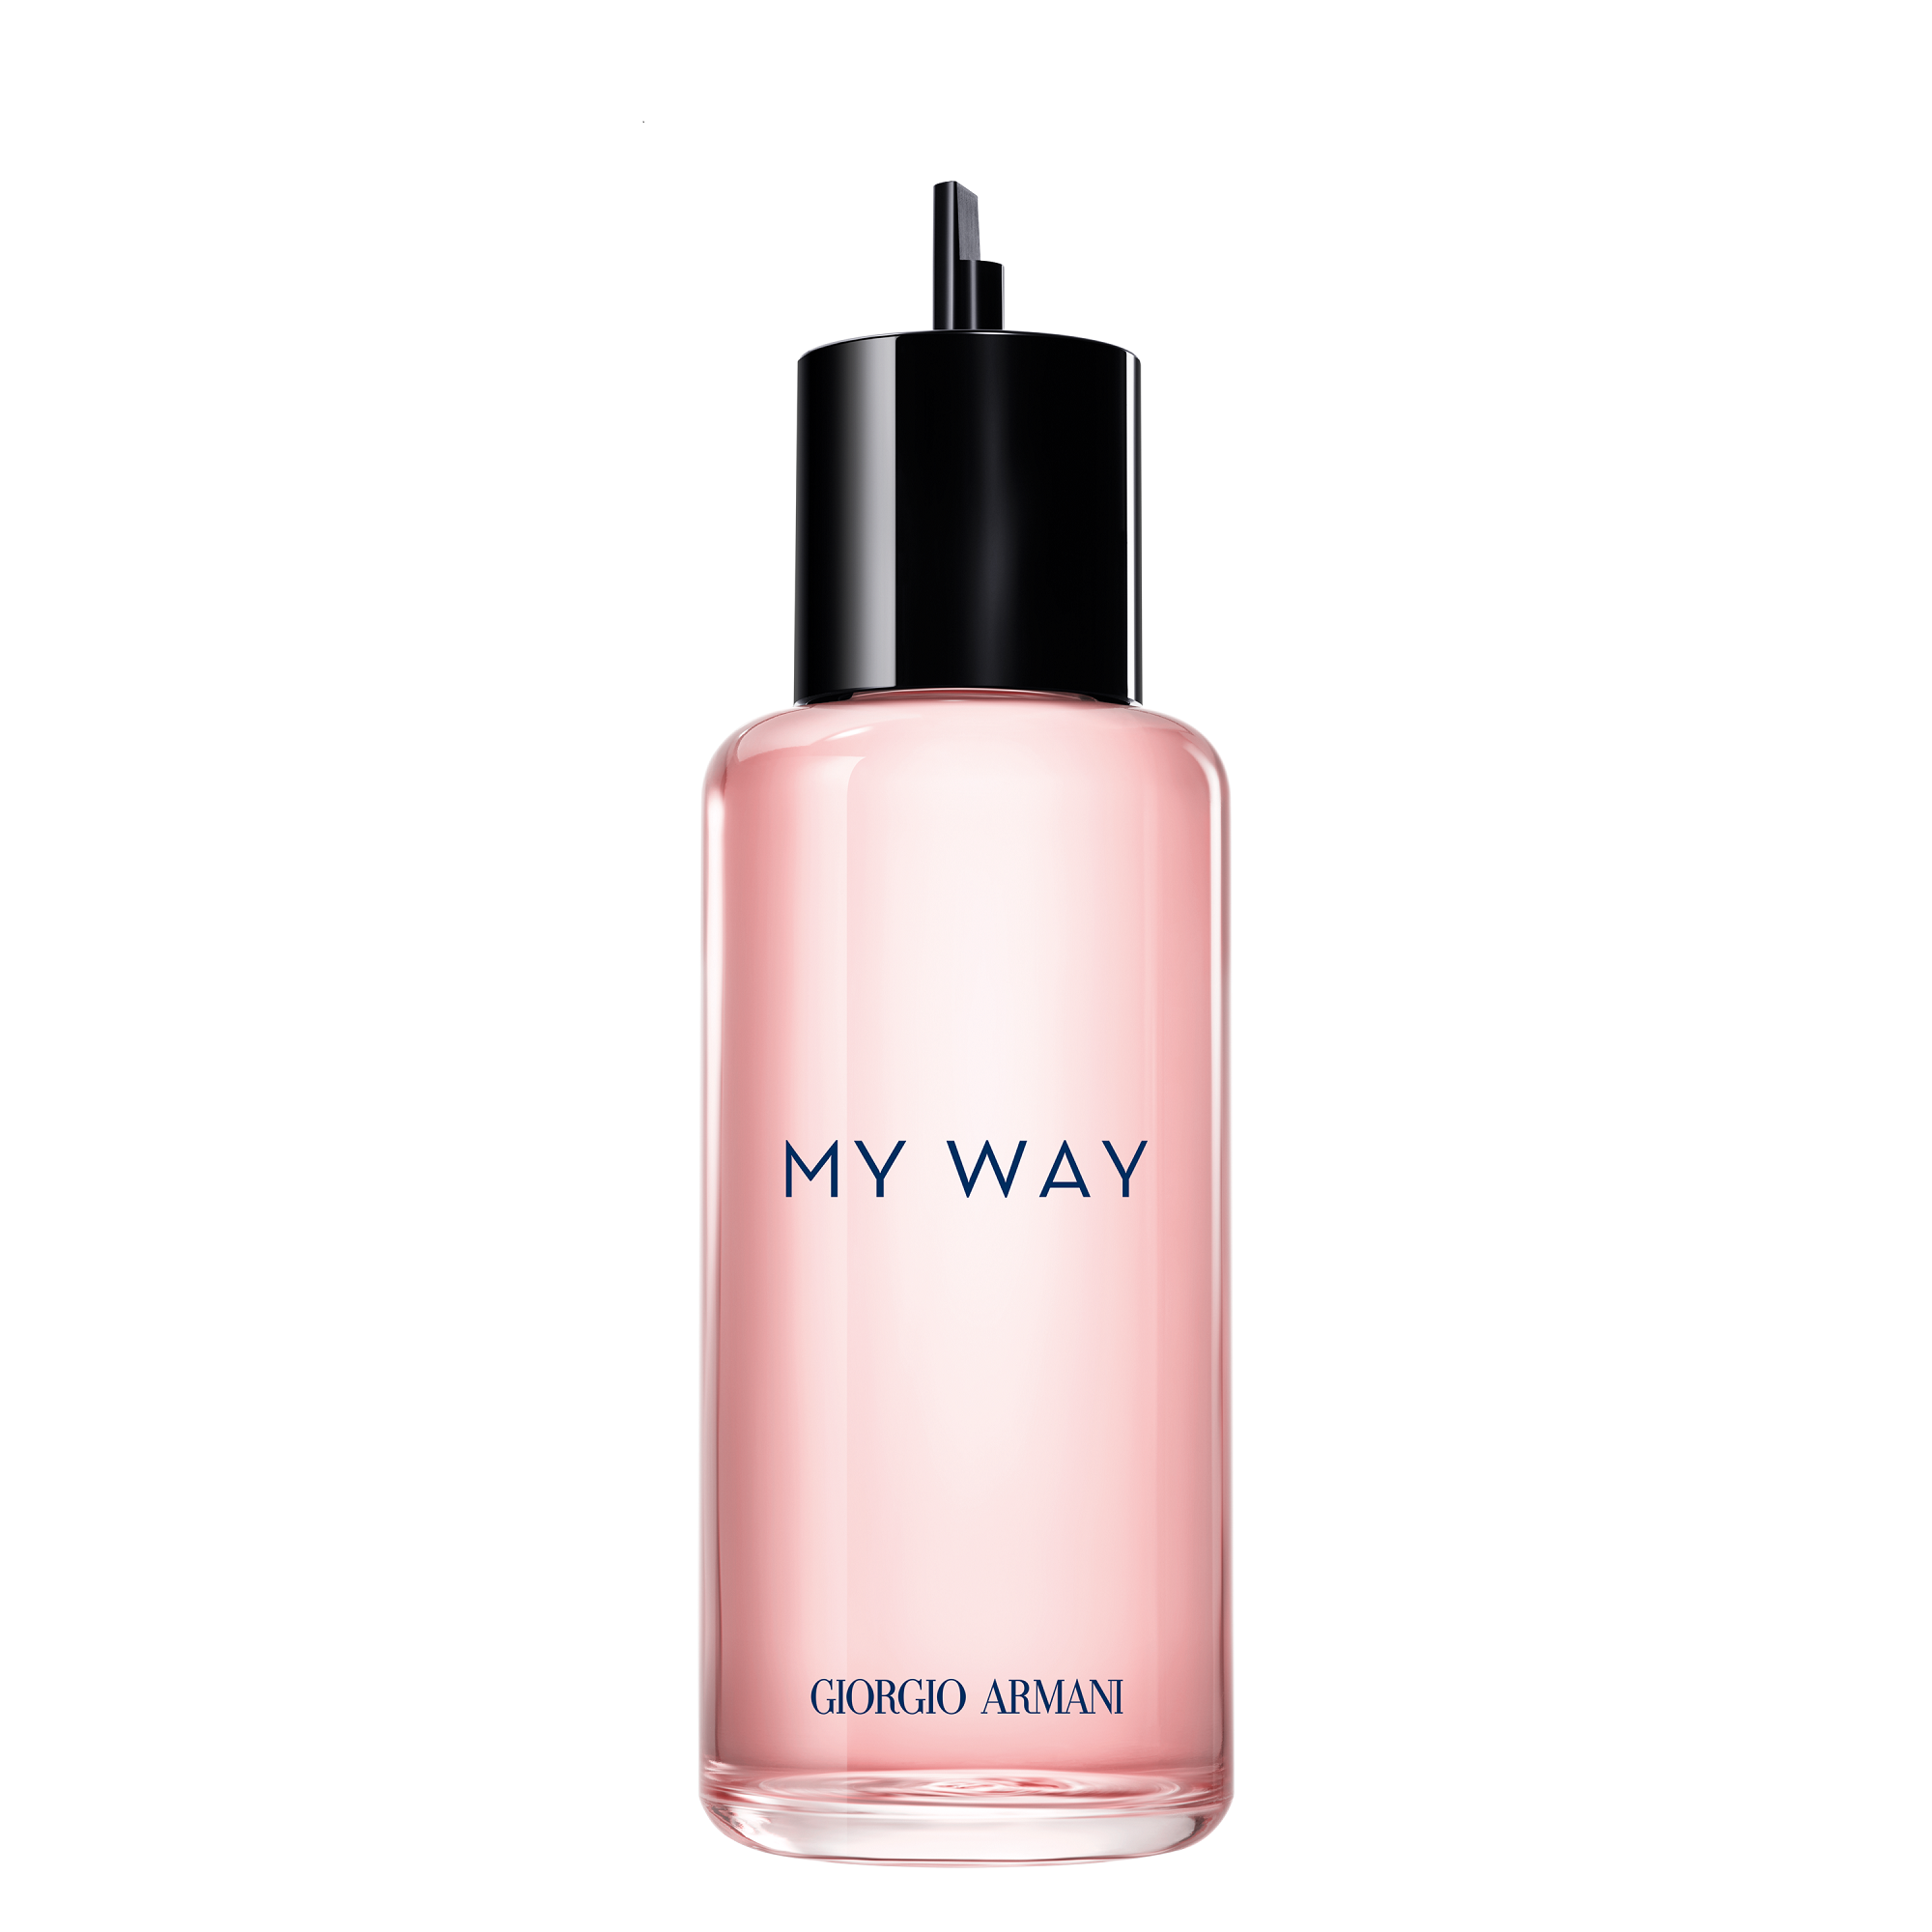 Giorgio Armani My Way Eau de Parfum női illat utántöltő